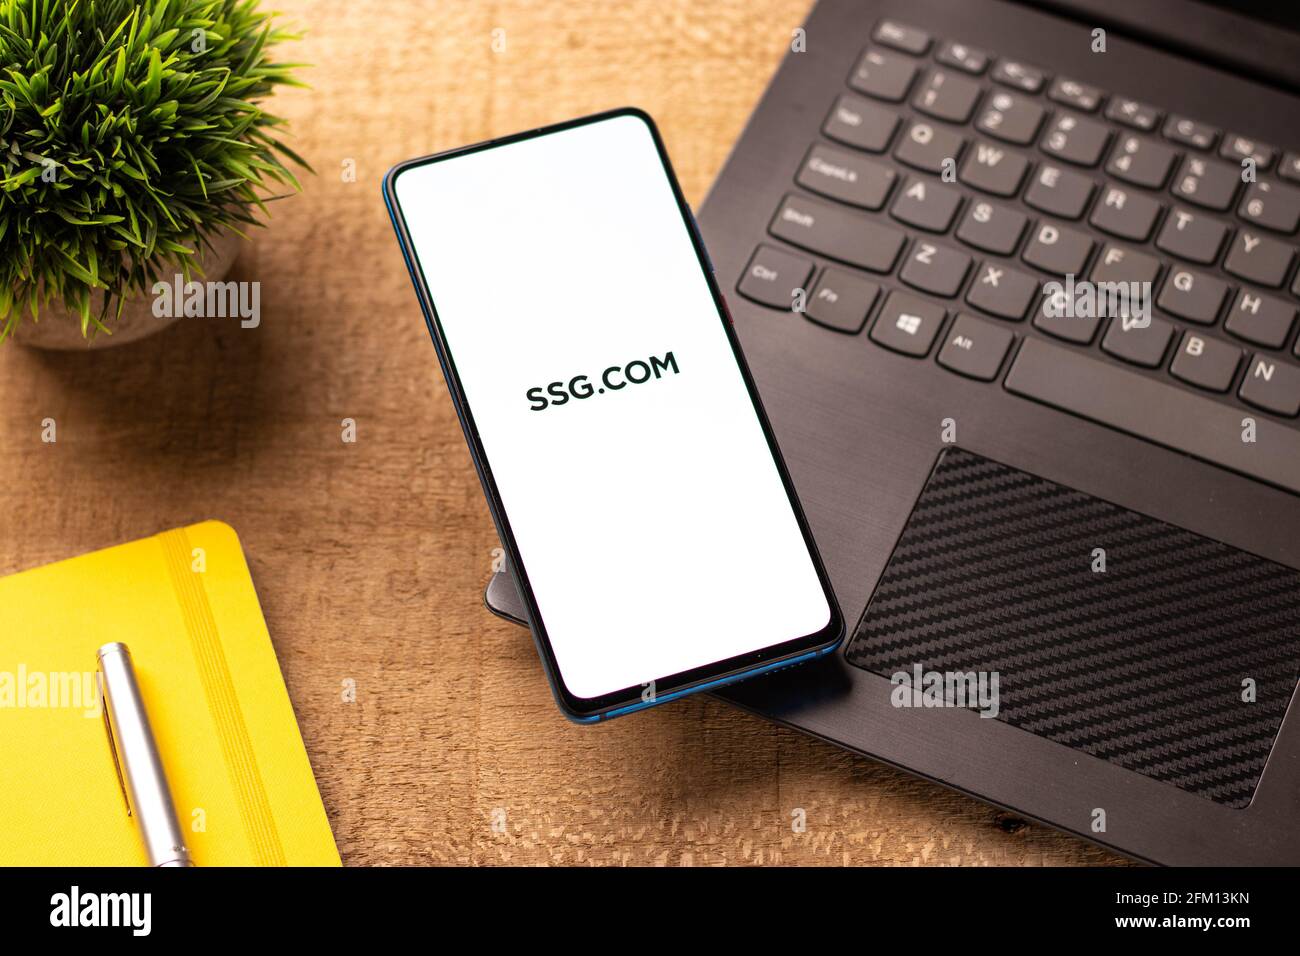 Assam, india - May 04, 2021 : SSG.COM logo on phone screen stock image. Stock Photo